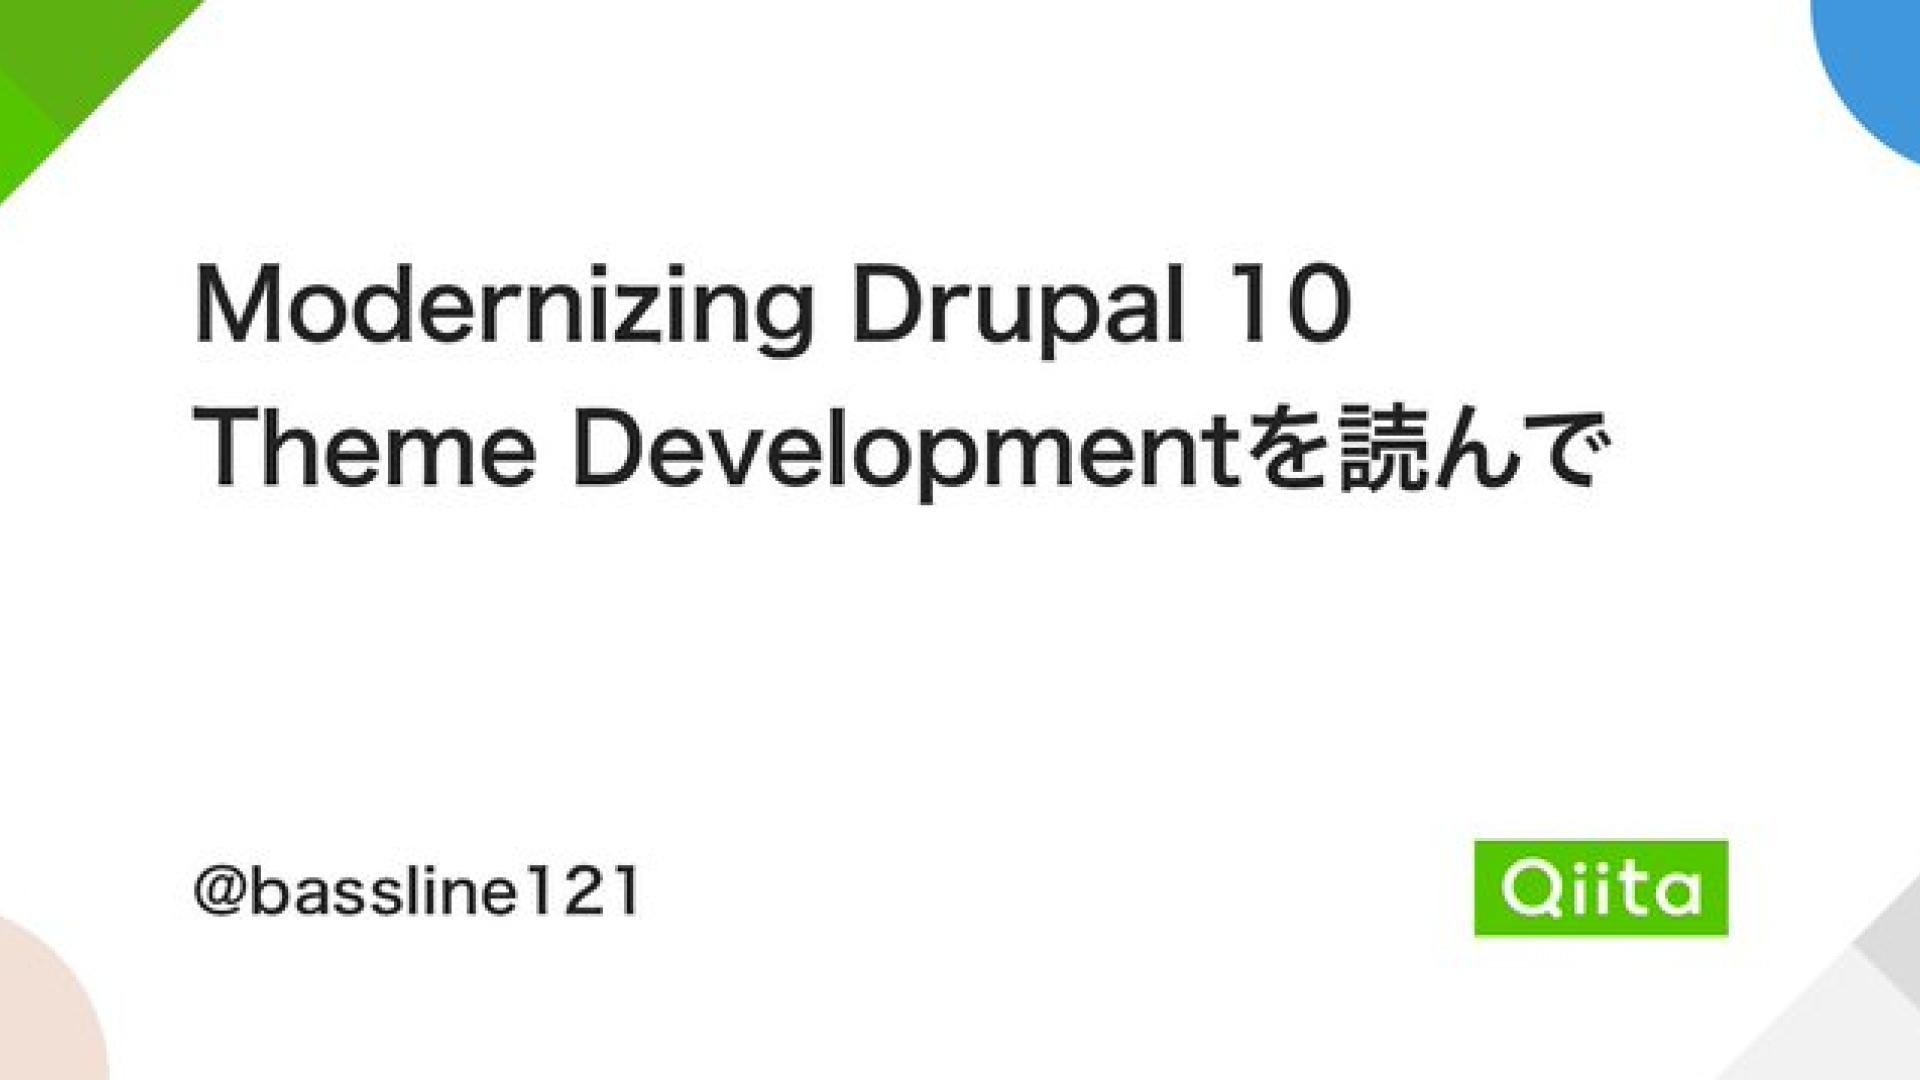 Read Modernizing Drupal 10 Theme Development